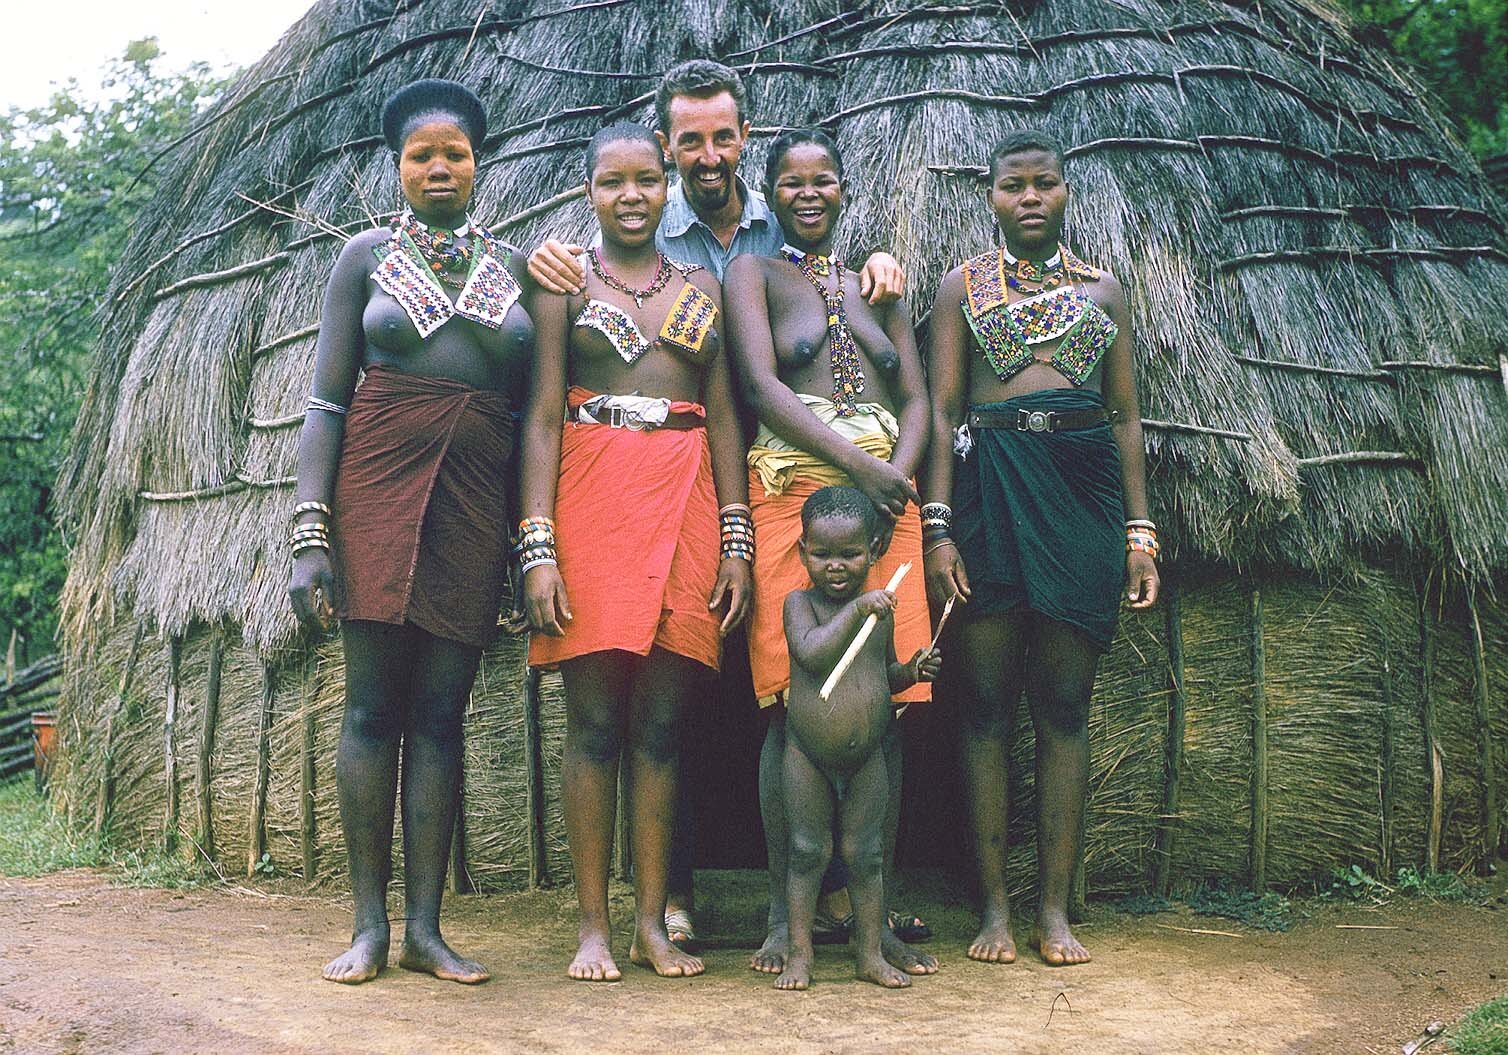 Metz 10 - 1959 - Dick and four African women and kid - Metz68 - 8 M.jpg